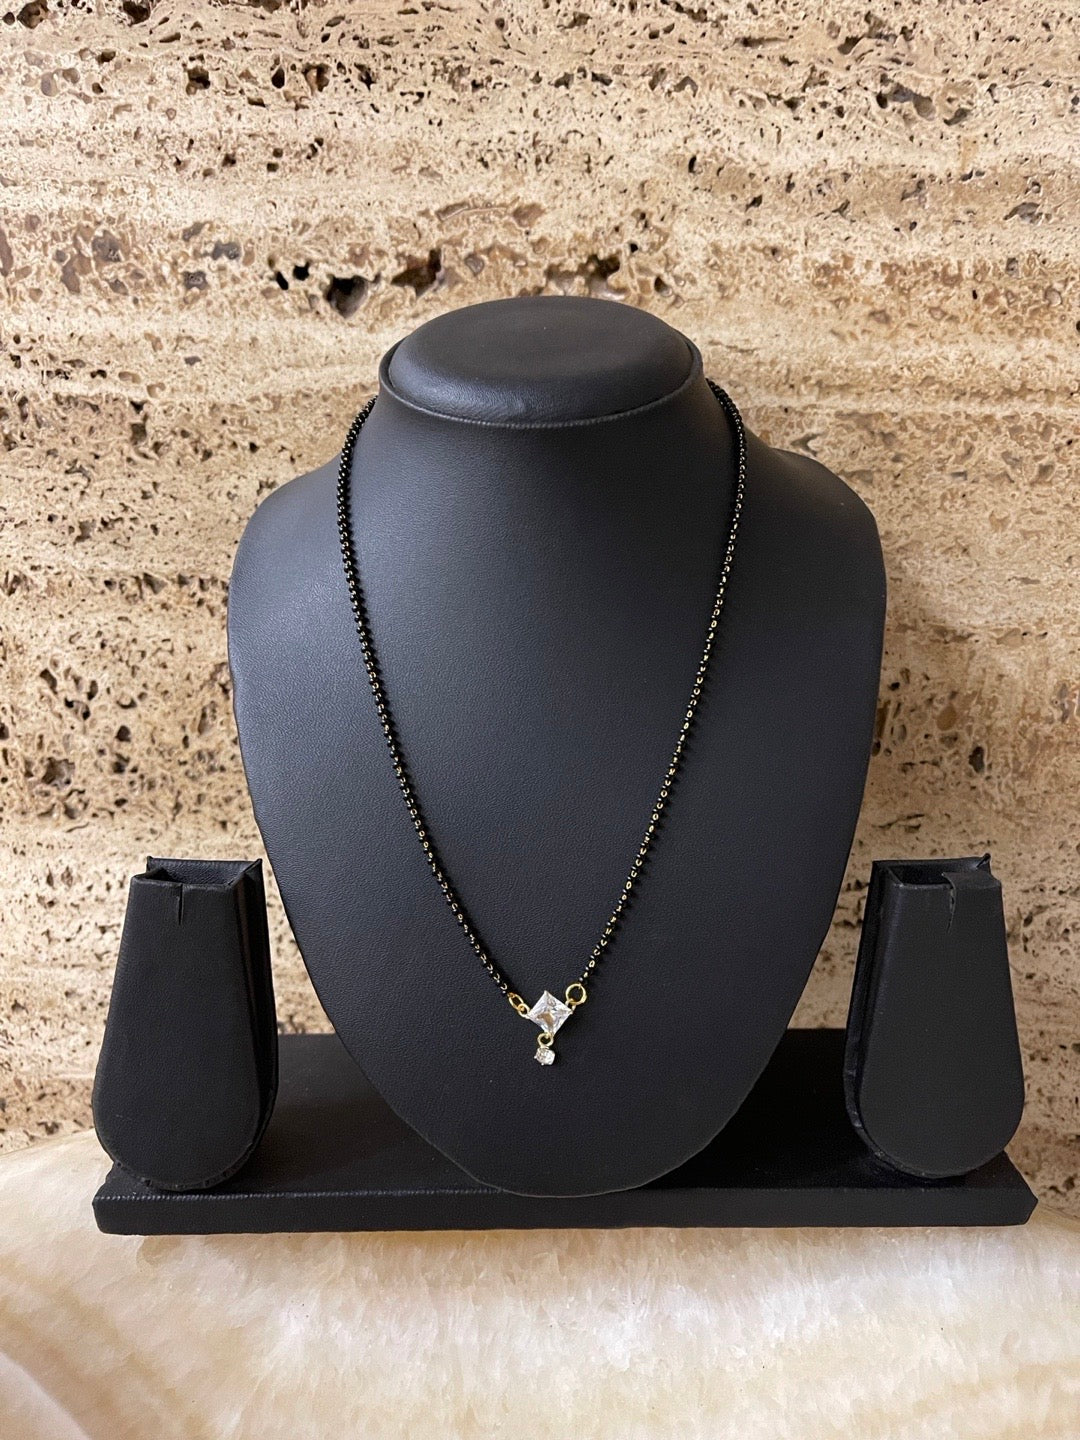 image for Simple Short Mangalsutra Designs American Single Diamond Square Pendant Black Beads Chain